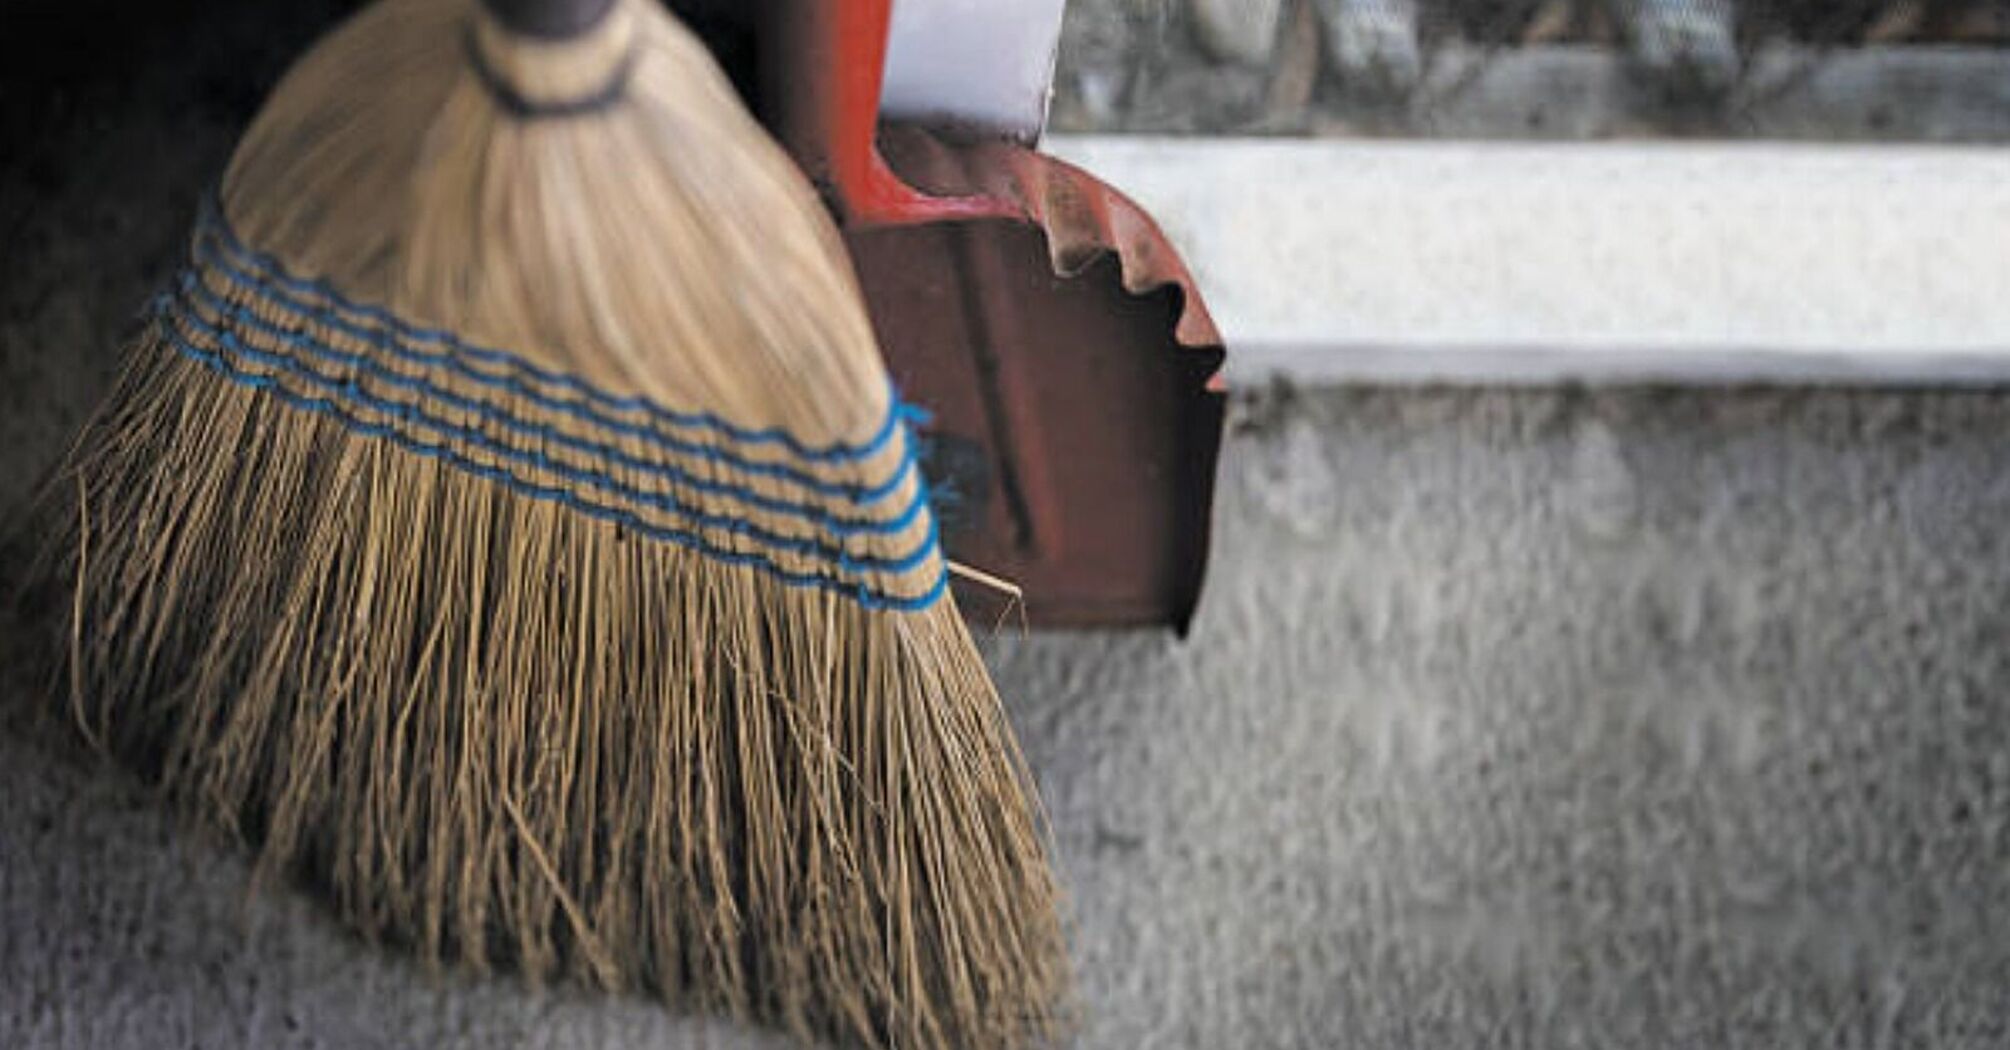 Broom fibers remain after sweeping